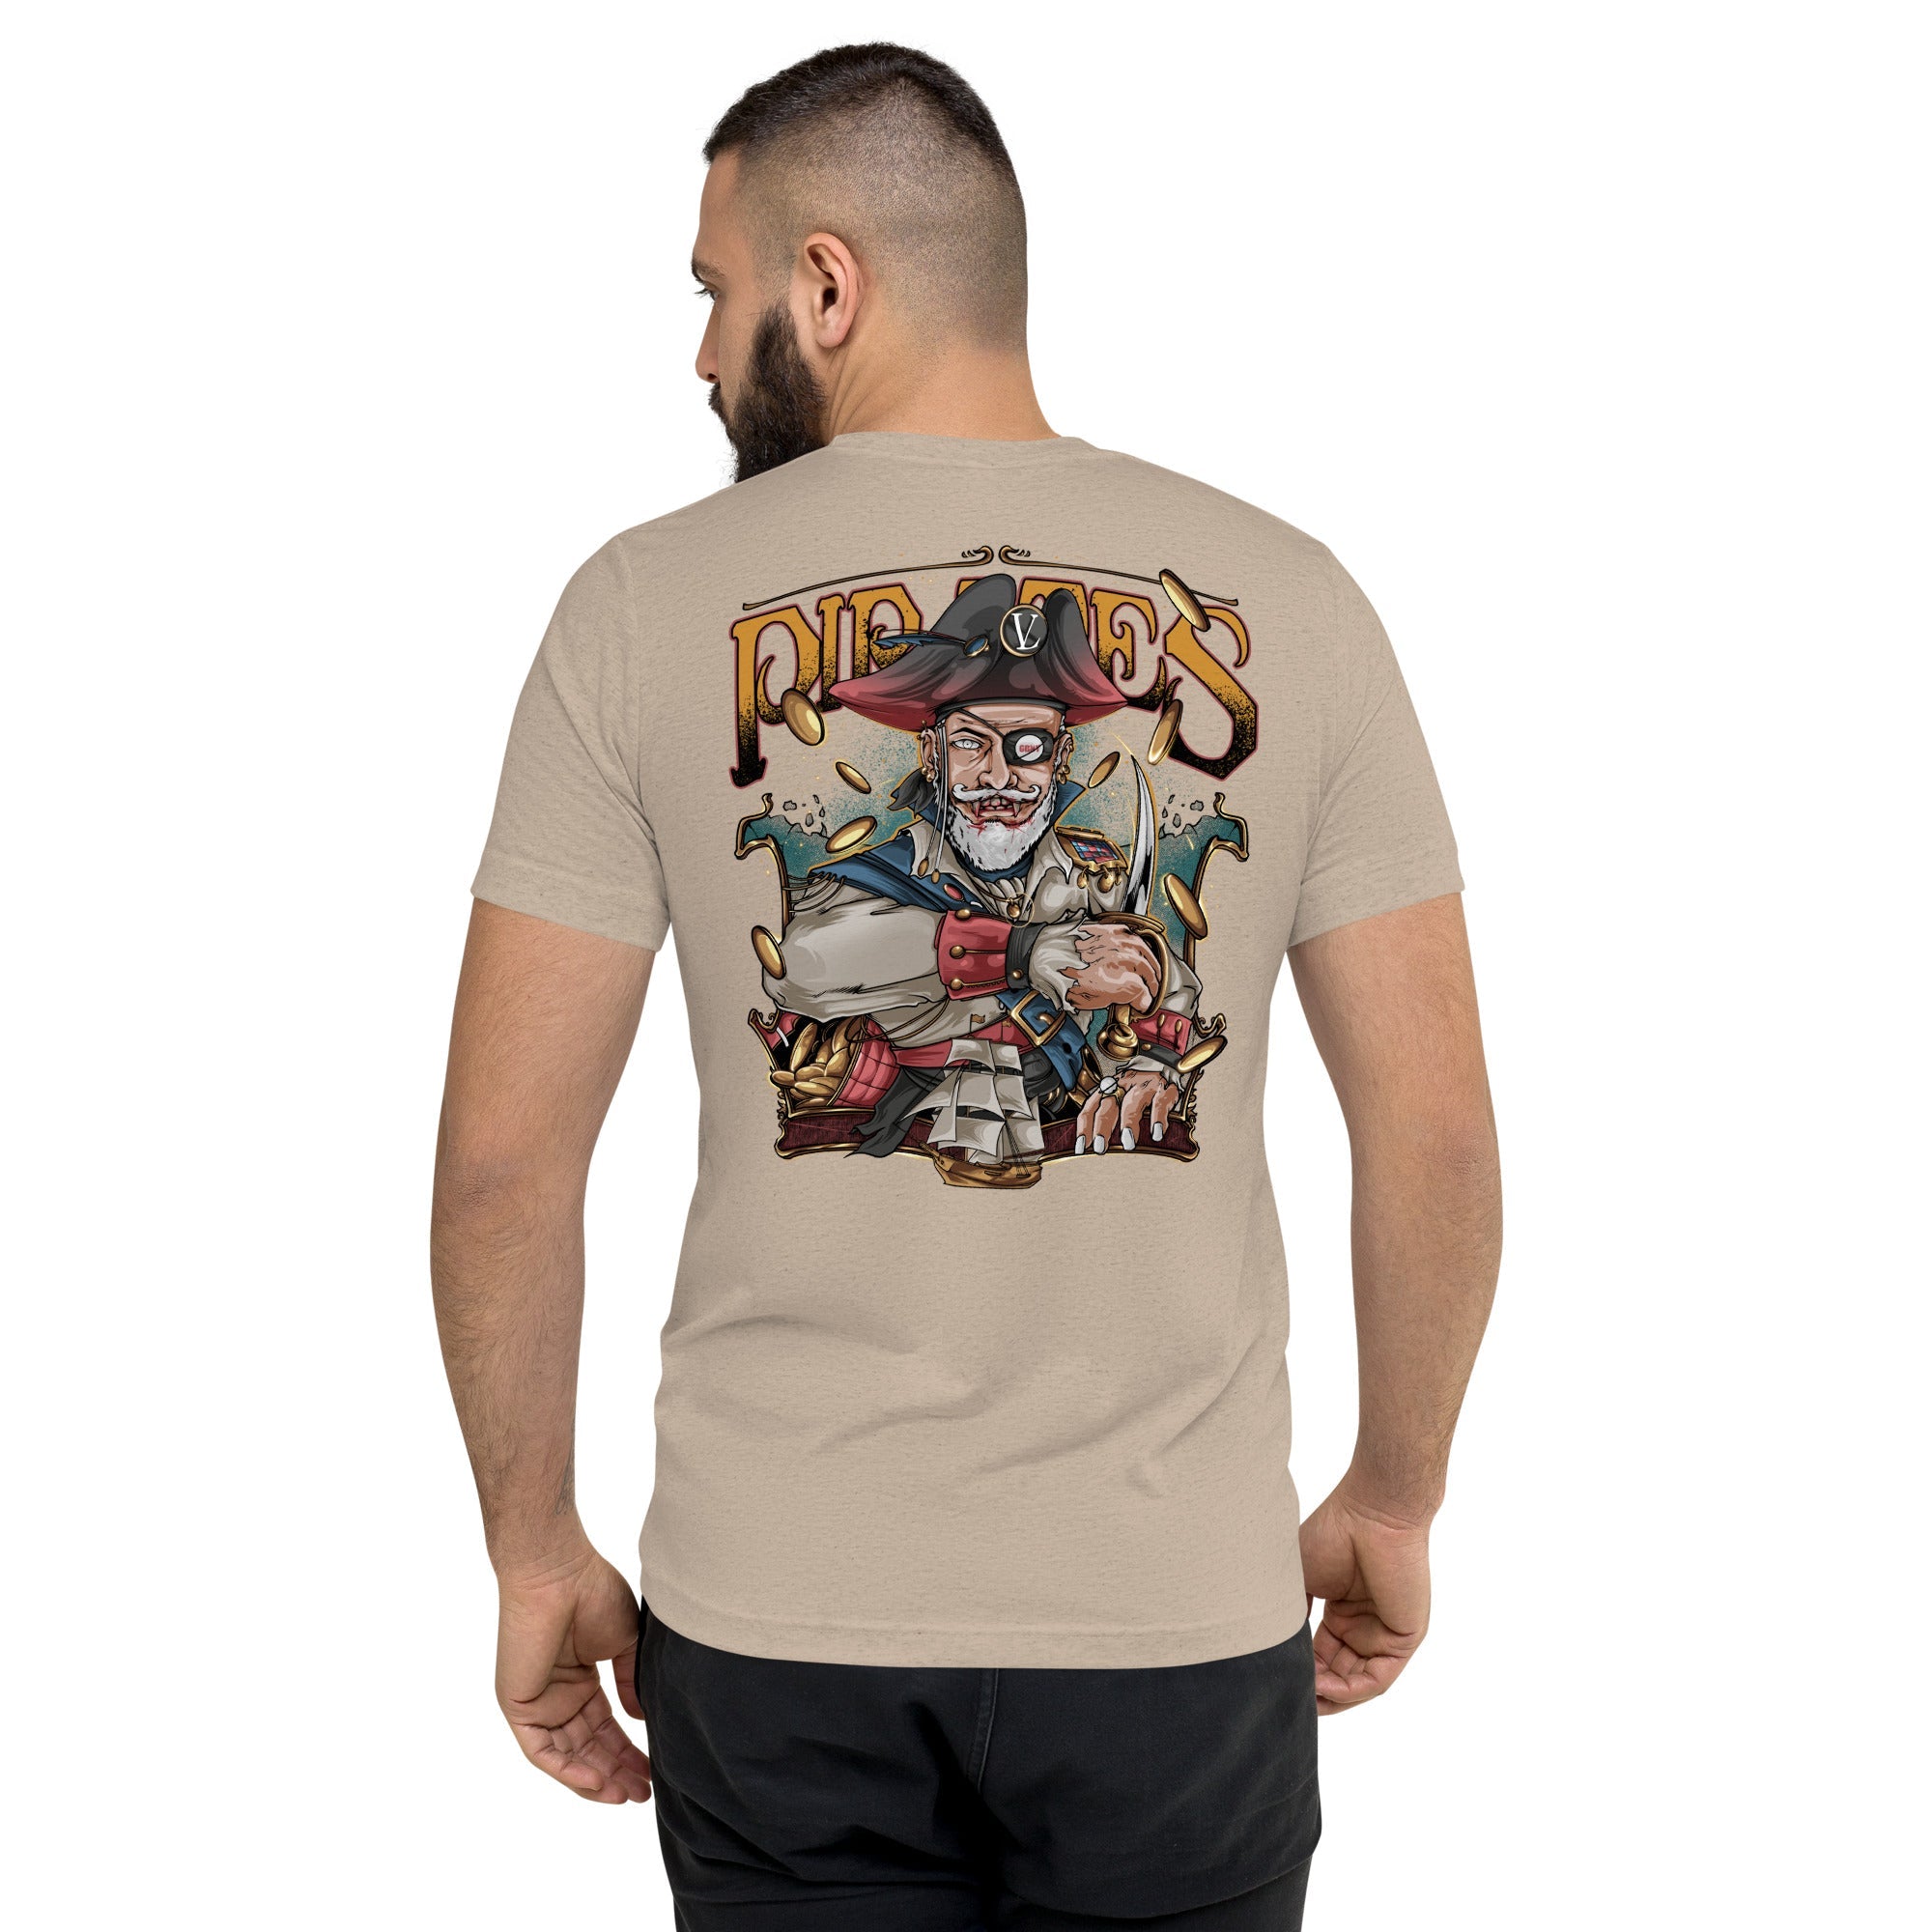 GBNY Vamp Life X GBNY "Pirates King" T-shirt - Men's